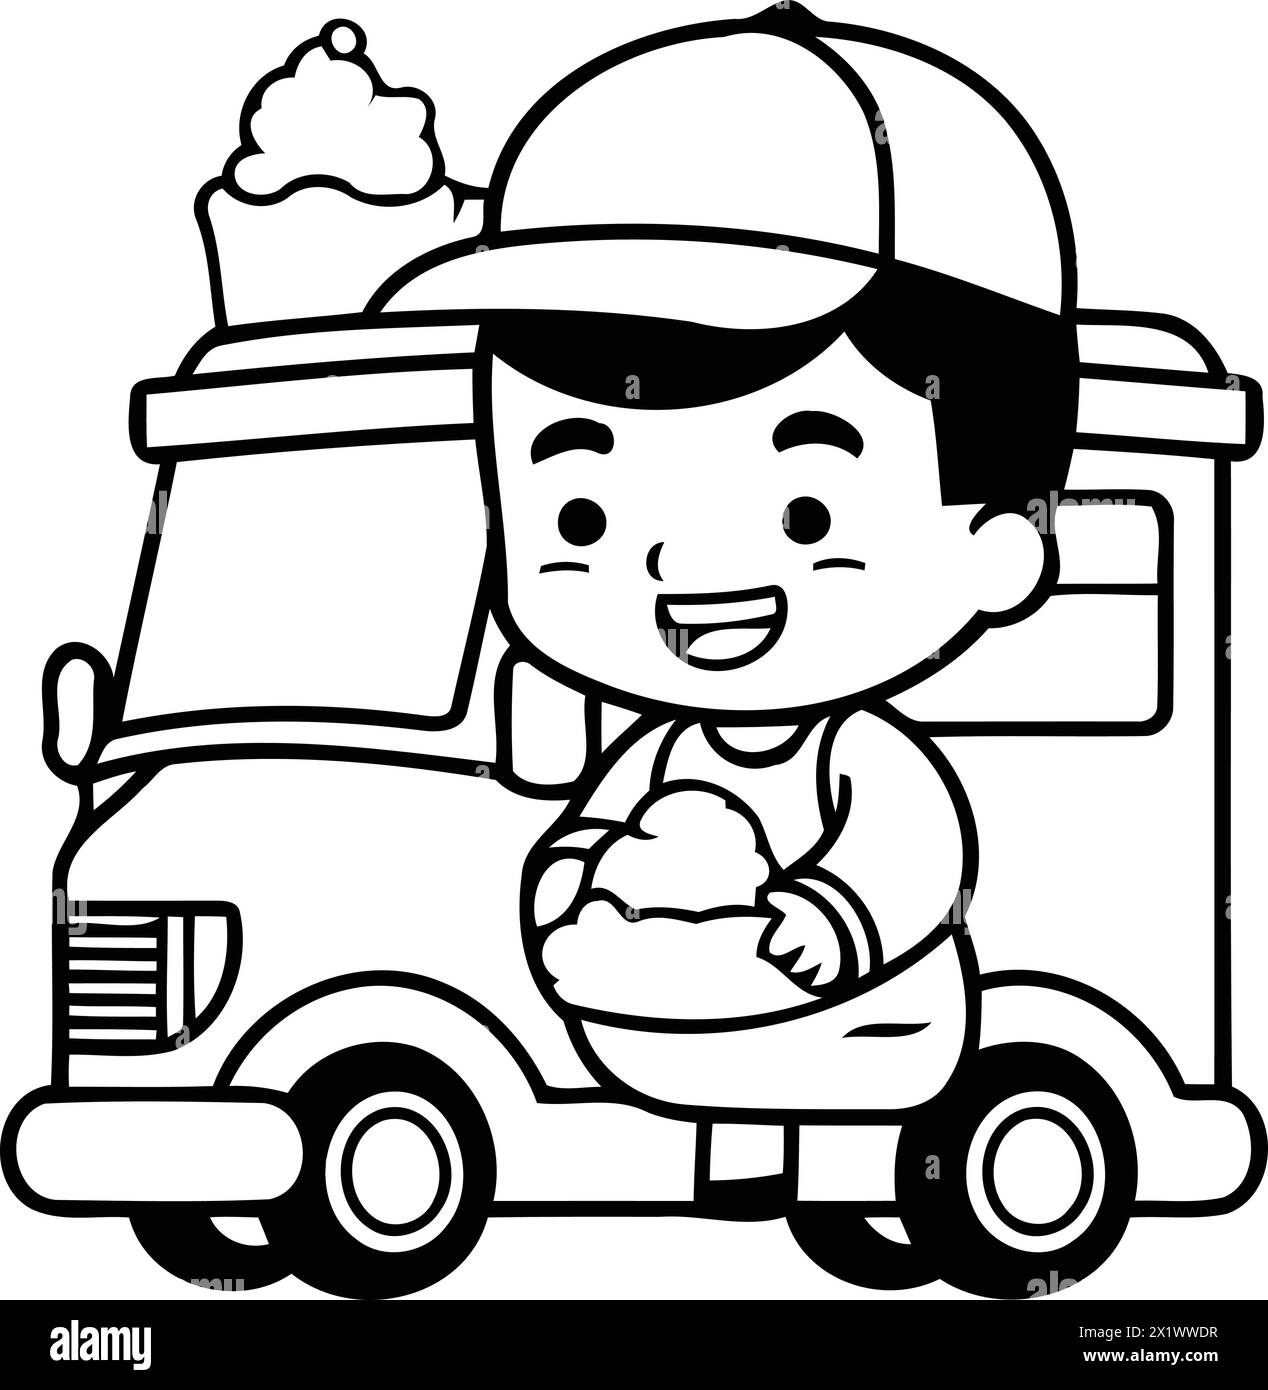 Cute boy with ice cream truck. Vector illustration in cartoon style. Stock Vector